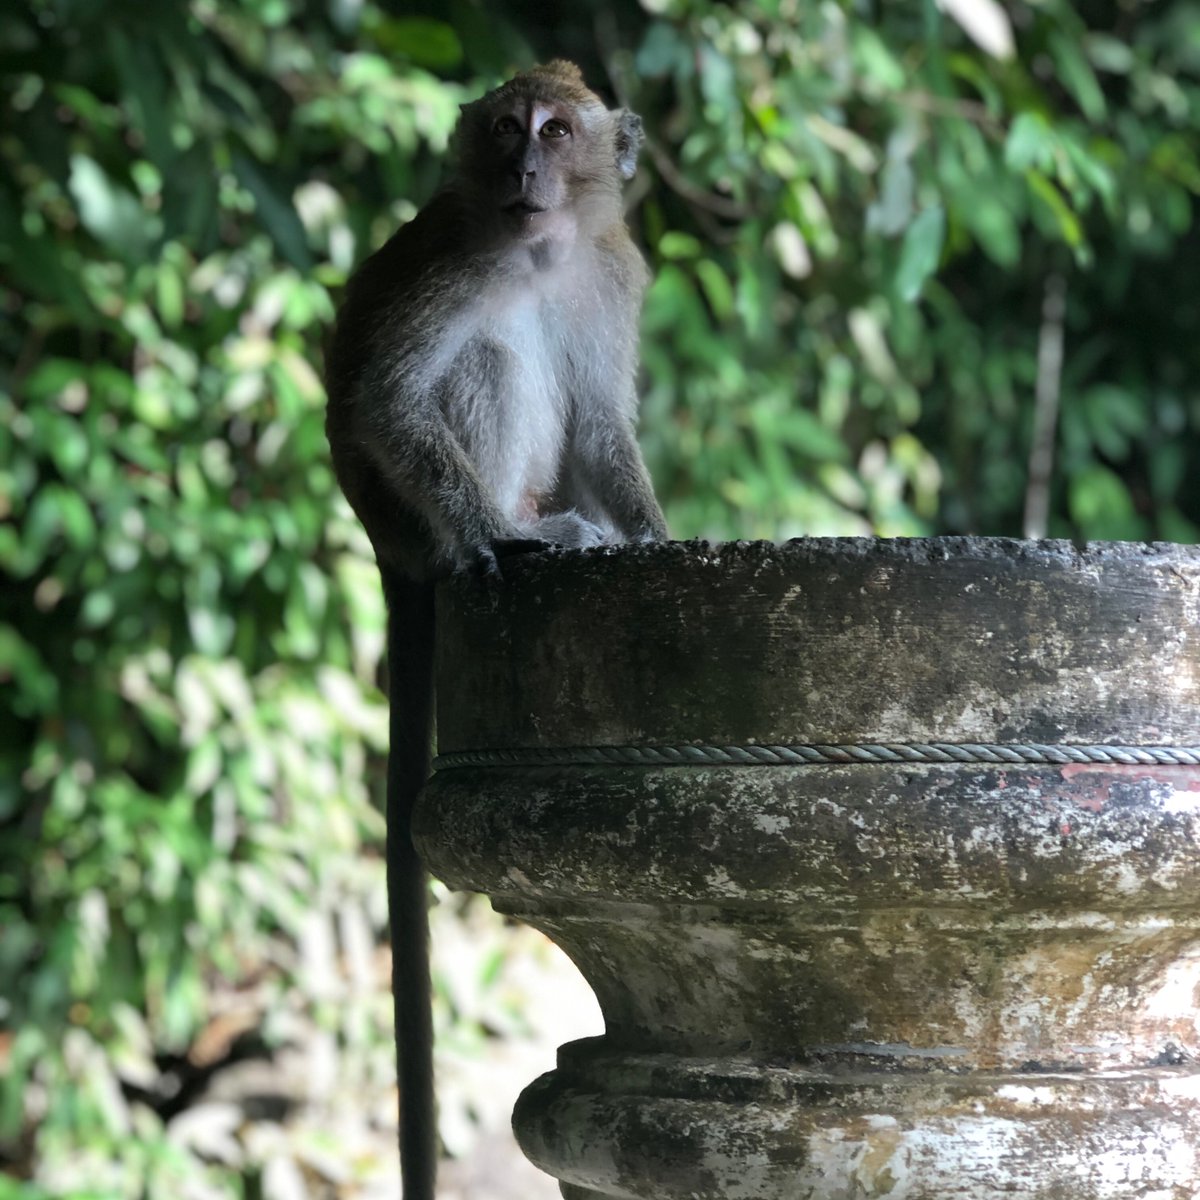 Incredible wildlife at Penang National Park. We were on the hunt for monitor lizards when we saw this monkey! ⁣
⁣
#wildlife #wildlifephotography #monkeys #malaysia #penang #travel #travelasia #traveltheworld #familieswhoadventure #explore #kidswhoexplore